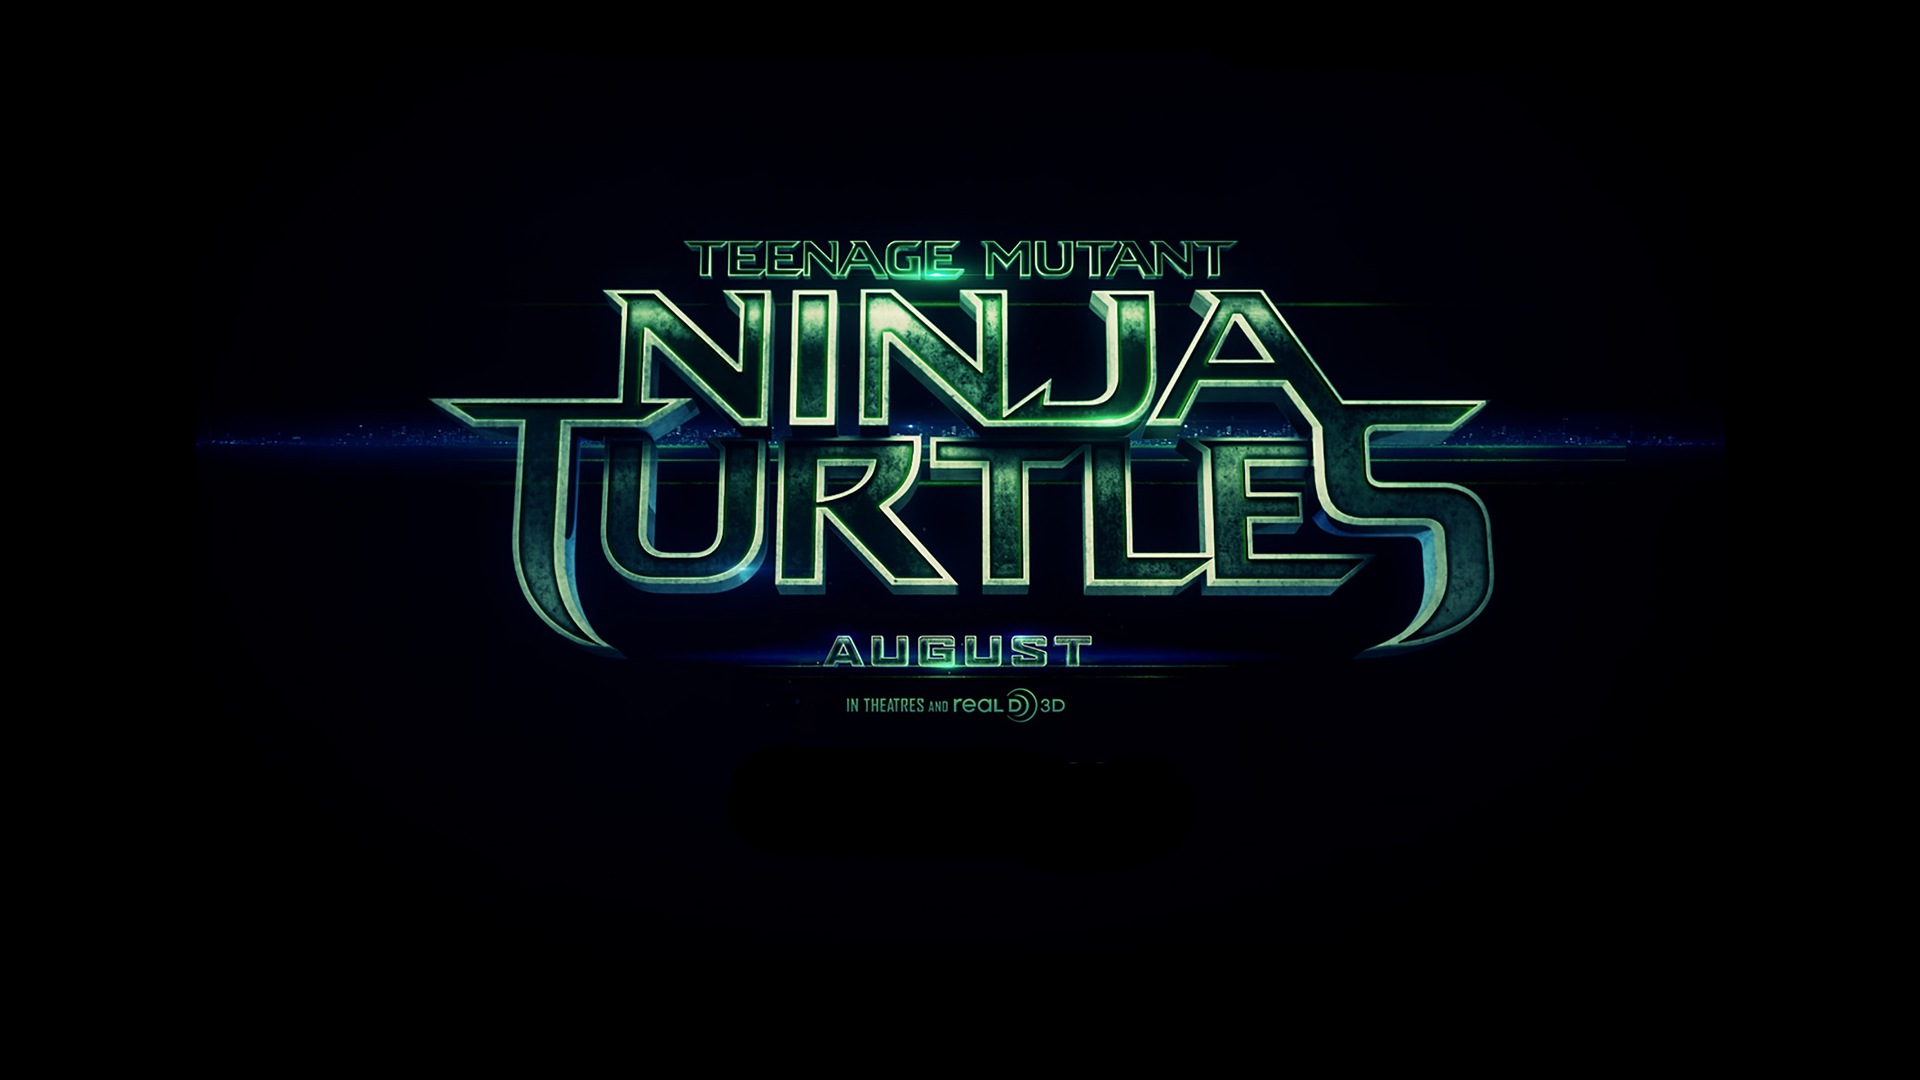 2014 Teenage Mutant Ninja Turtles HD movie wallpapers #2 - 1920x1080